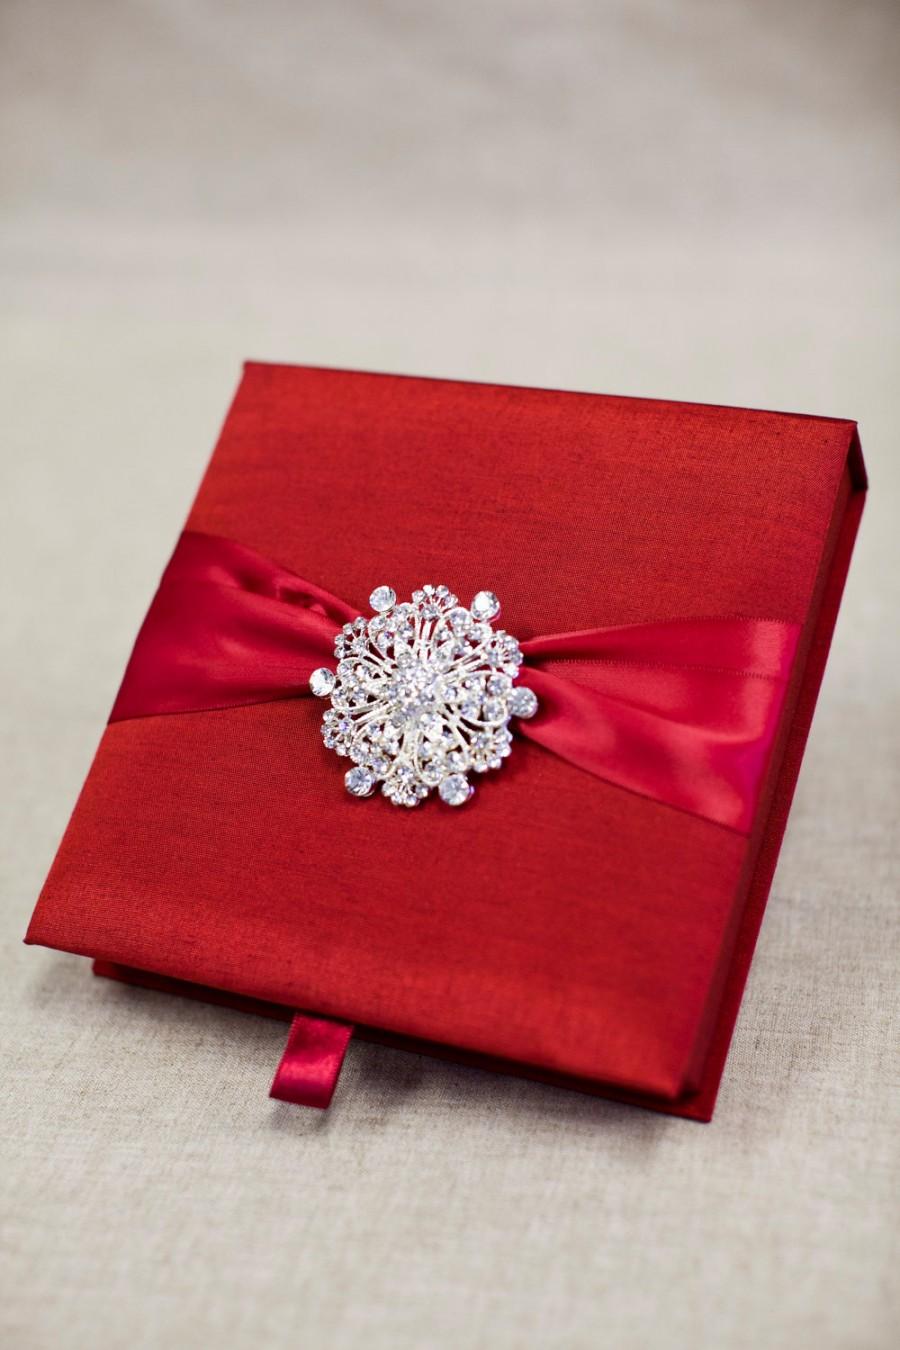 زفاف - Wedding Invitation Silk Fabric Box with Satin Ribbon and a Shimmery Rhinestone Brooch